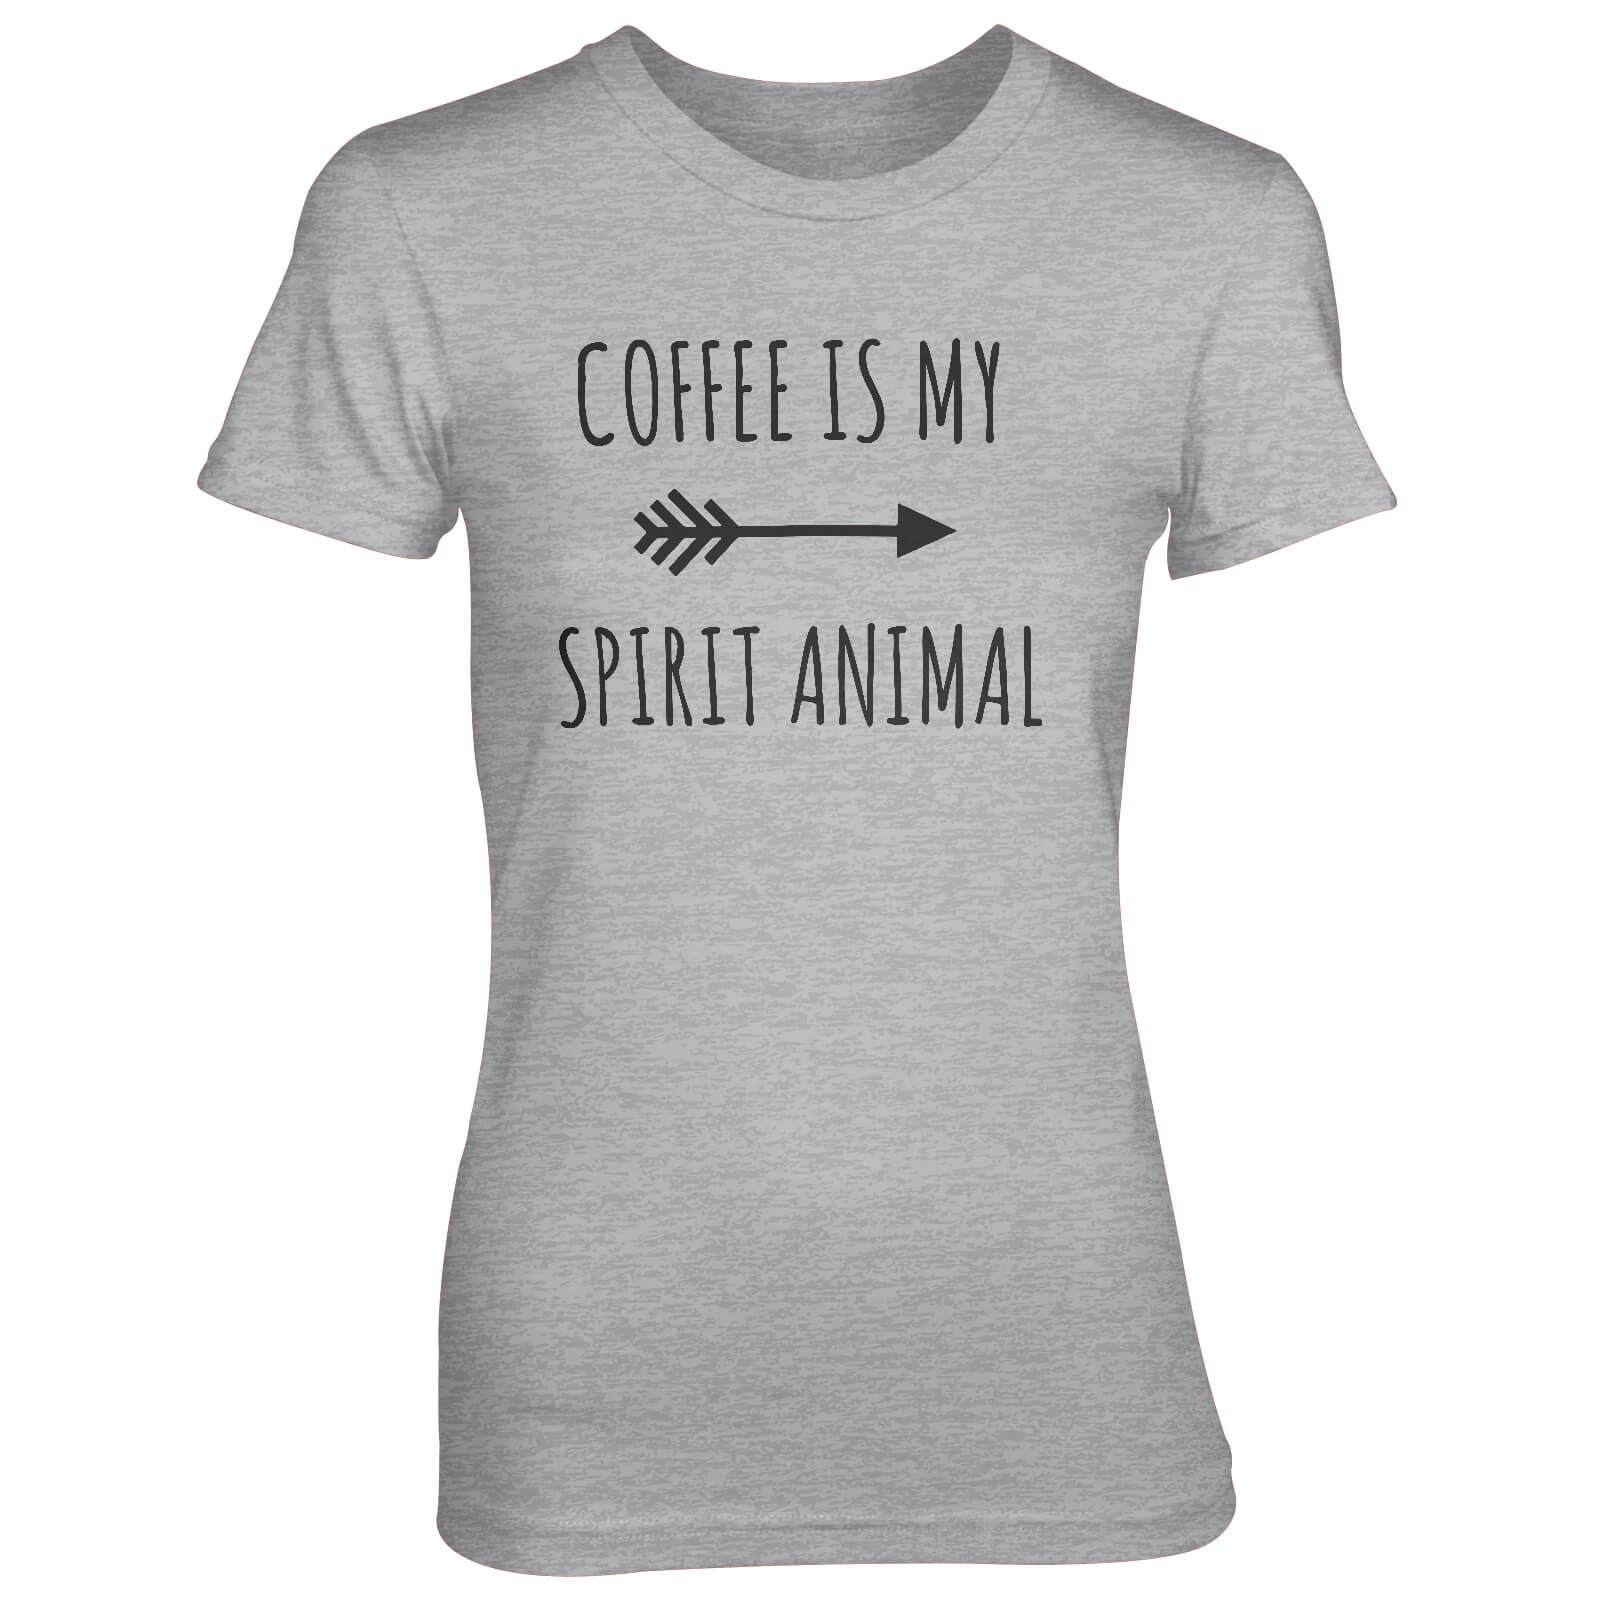 Coffee Is My Spirit Animal Women's Grey T-Shirt - S - Grey